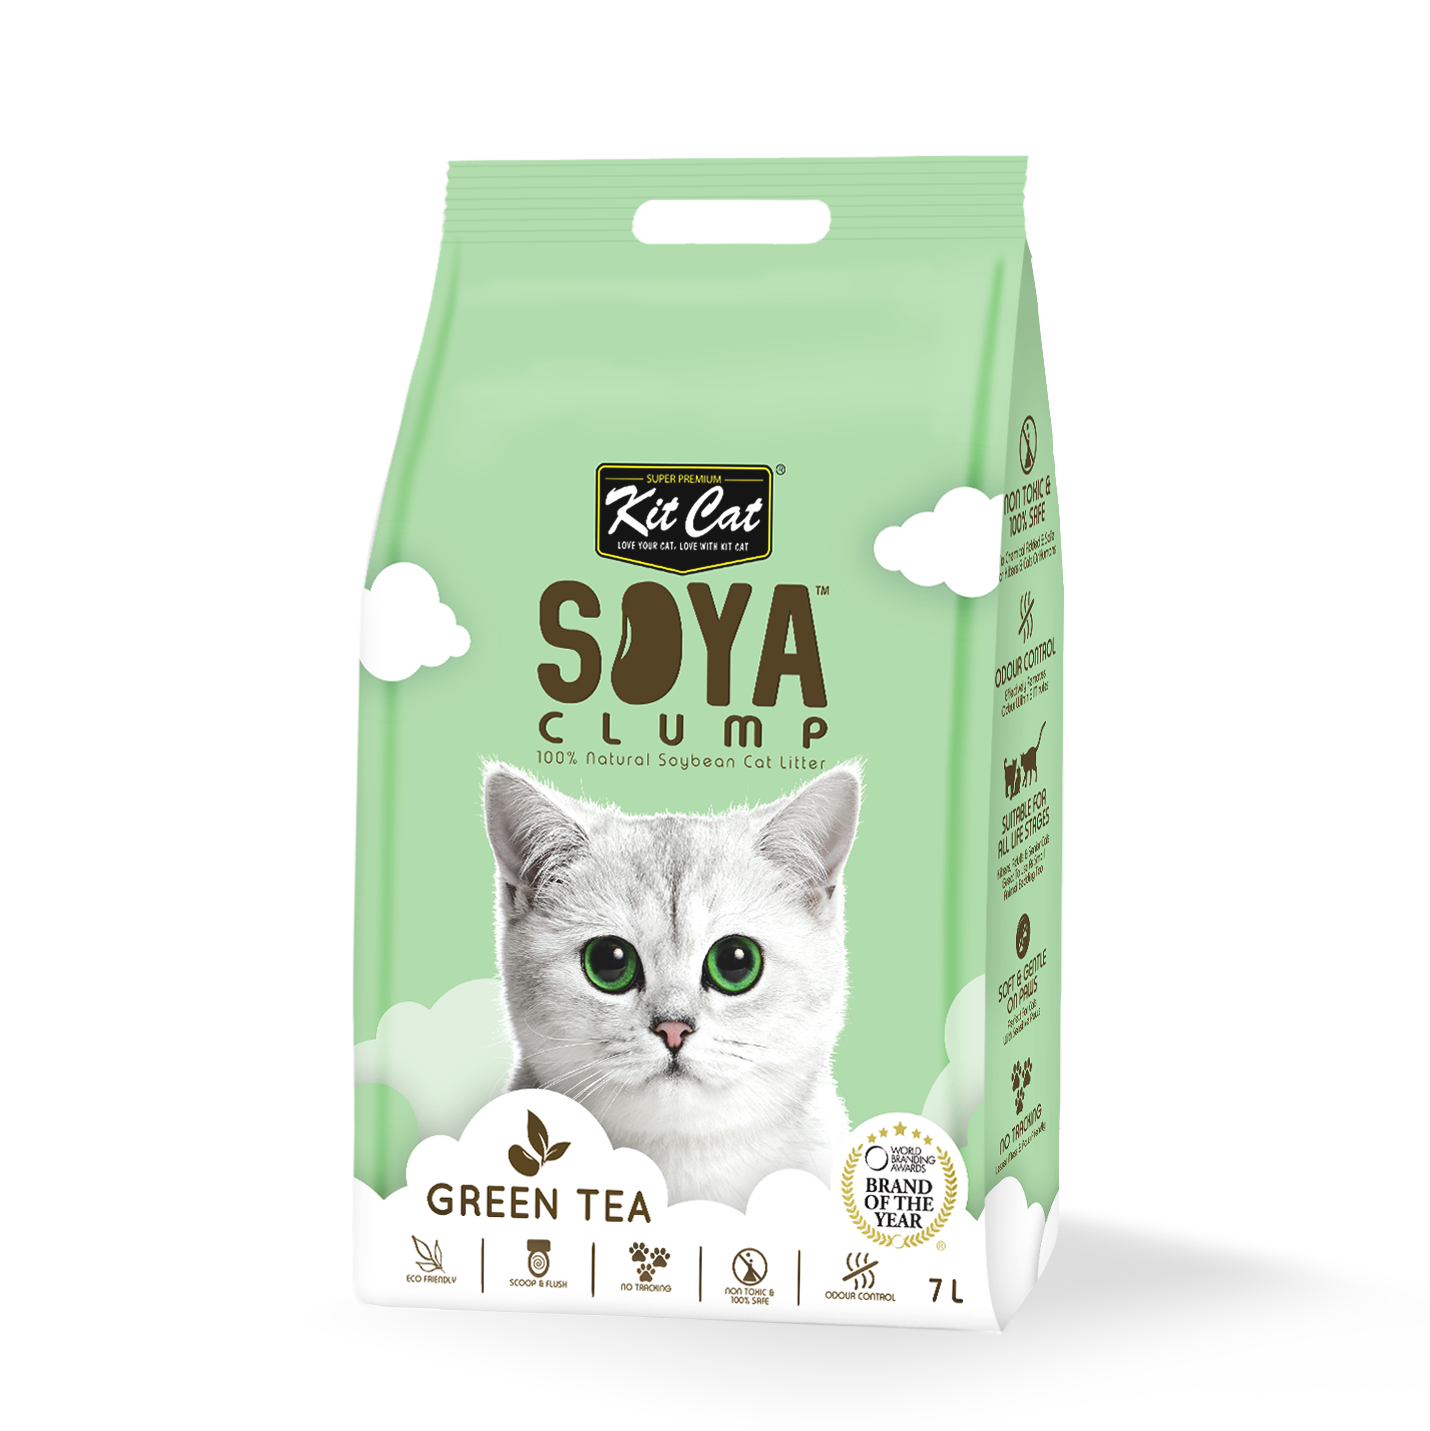 Kit Cat Soya Clump Cat Litter Green Tea 7L (Bundle of 6)